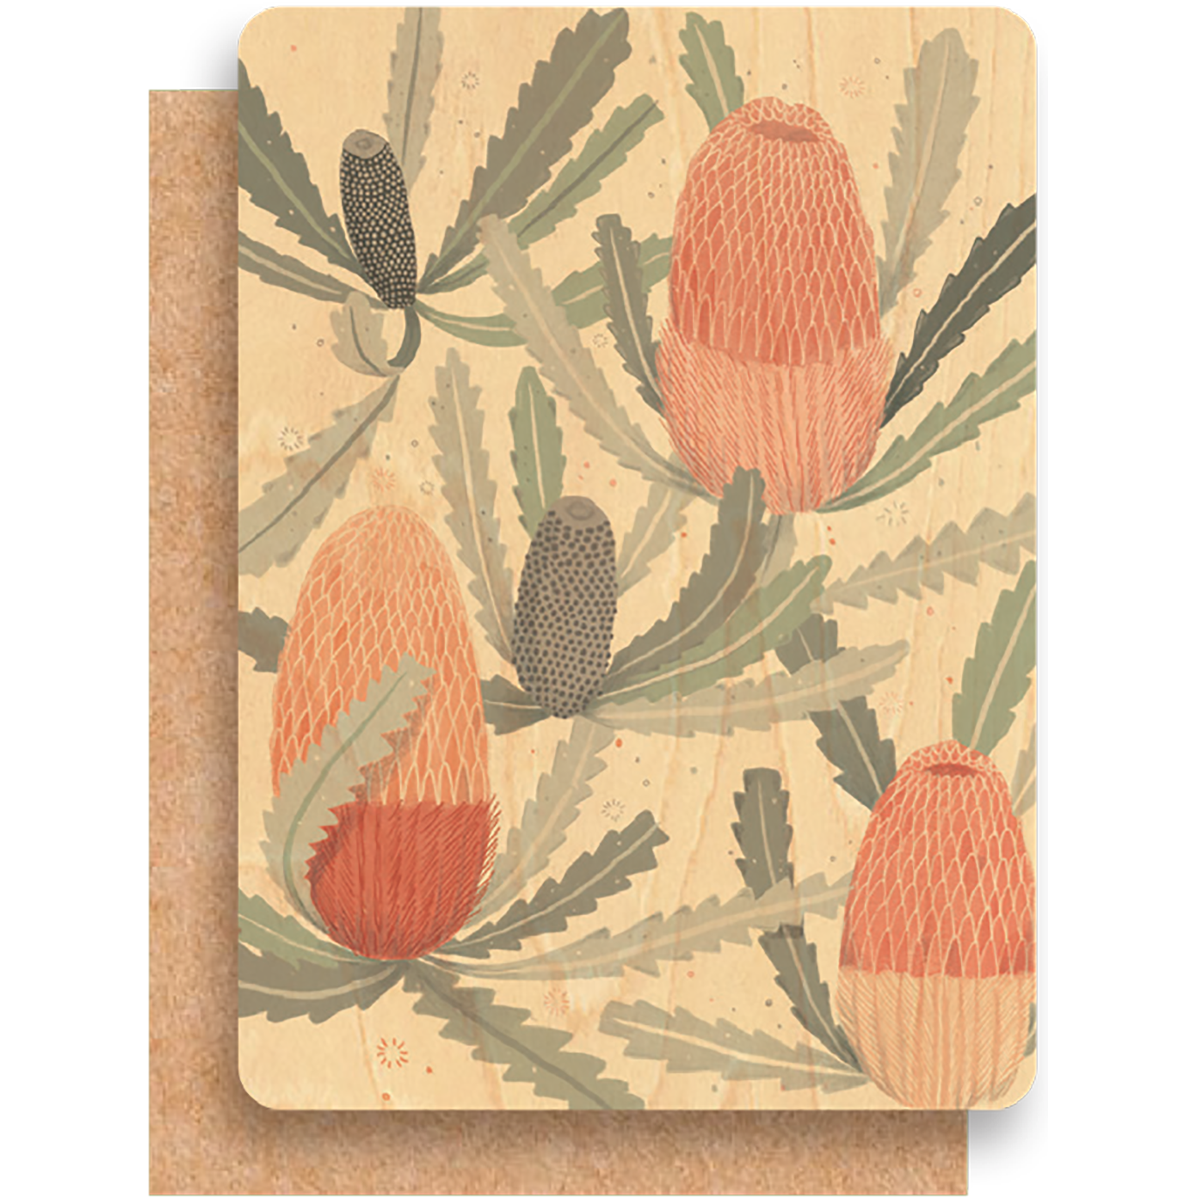 Wood Greeting Card - Bushy Banksia